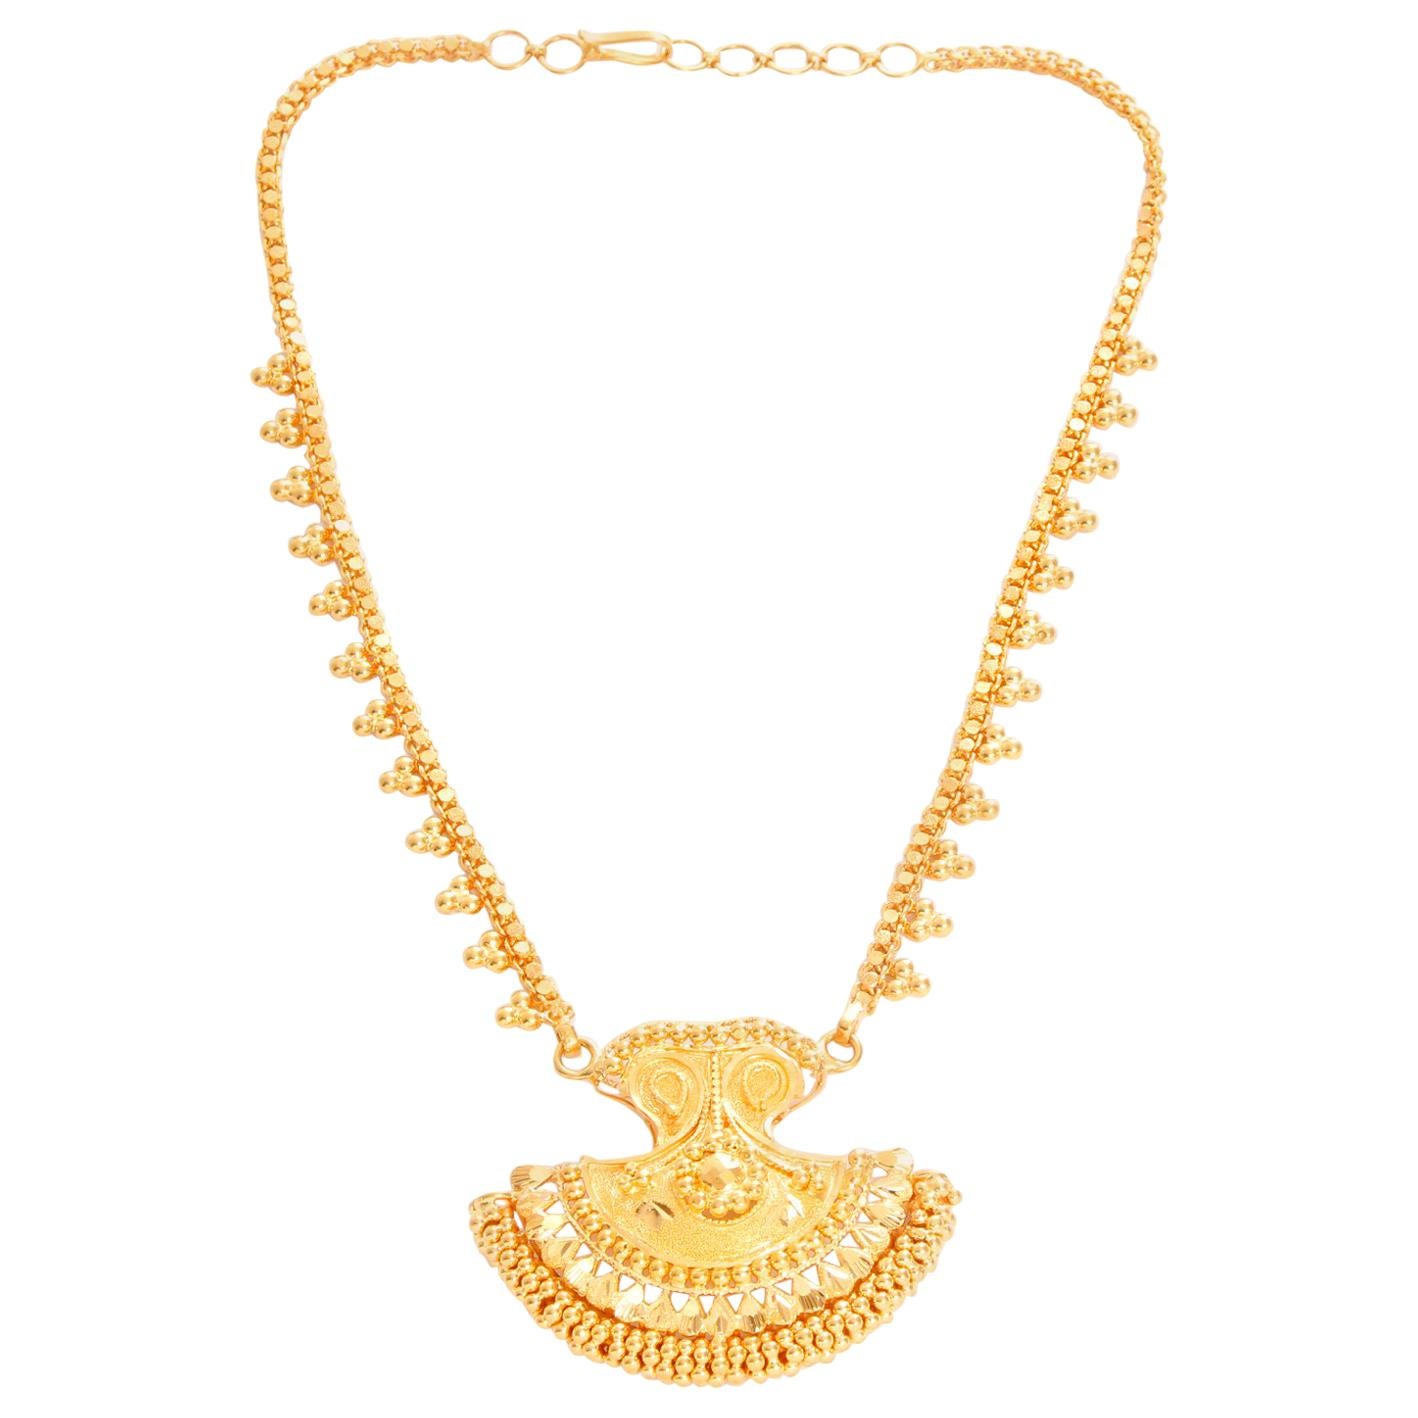 22 Karat Yellow Gold Indian Design Necklace